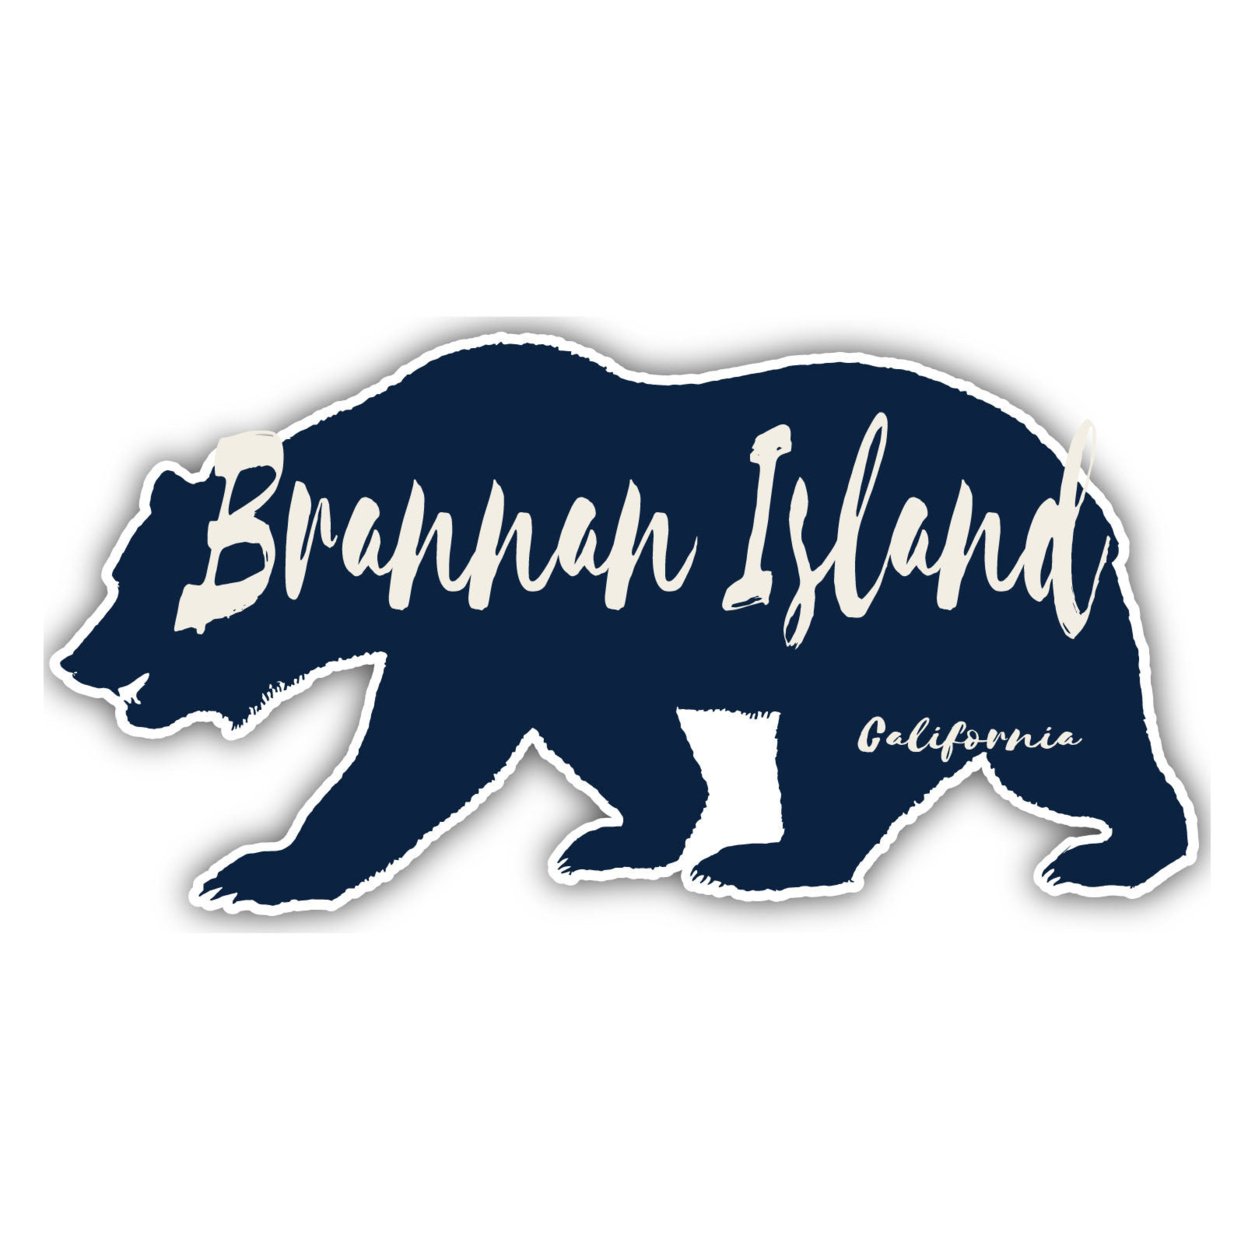 Brannan Island California Souvenir Decorative Stickers (Choose Theme And Size) - Single Unit, 4-Inch, Bear